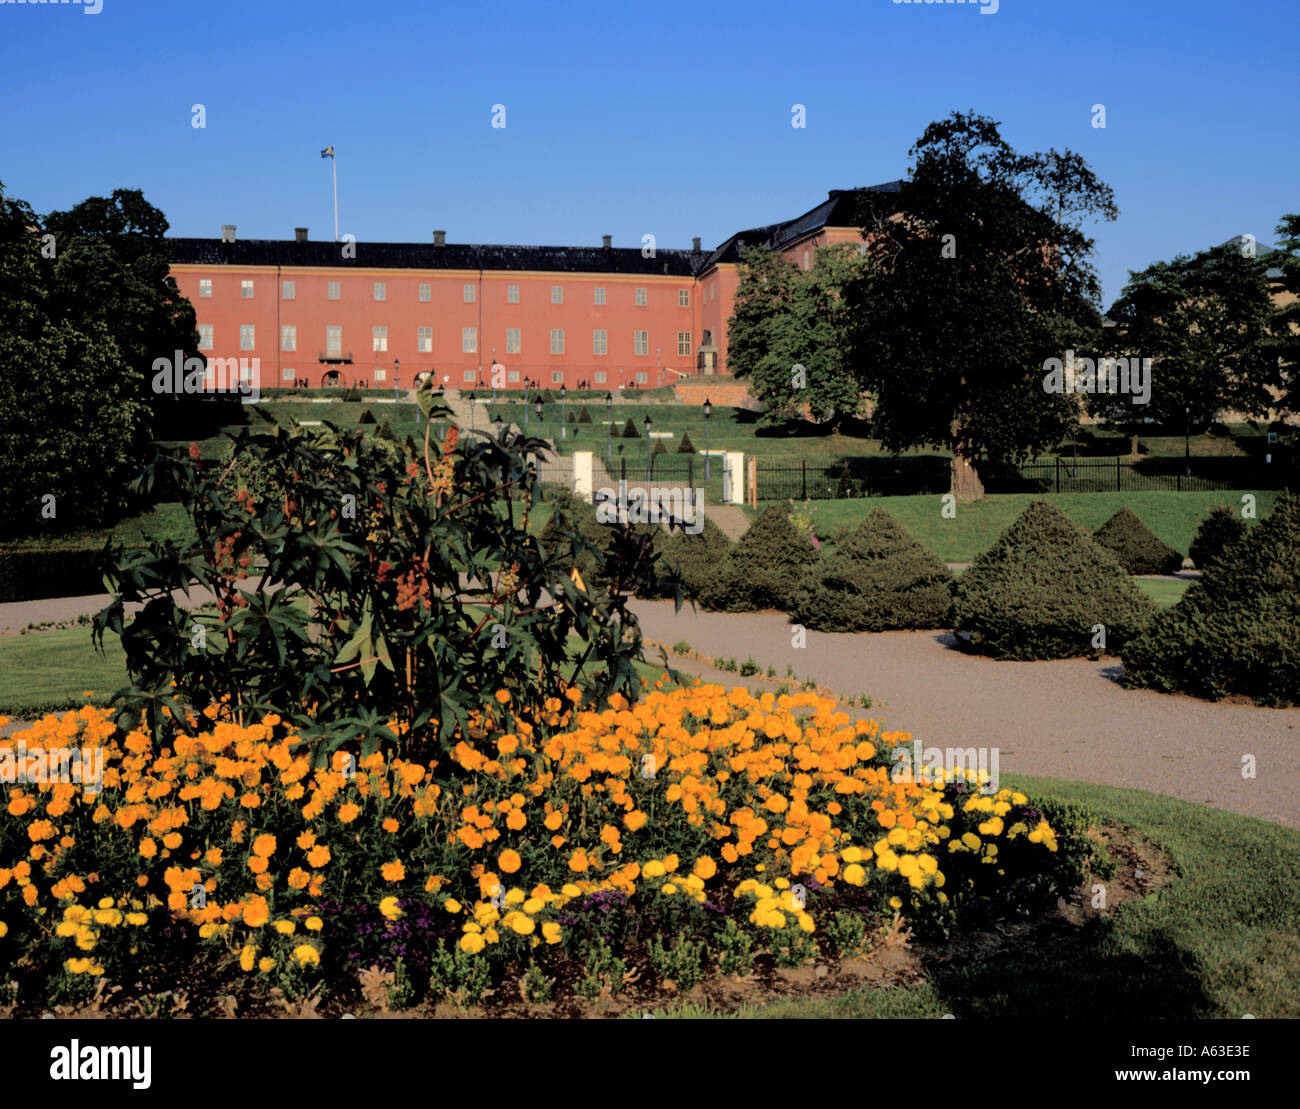 Uppsala Castle seen from formal Botanical Gardens, Uppsala, Uppland, Sweden. Stock Photo